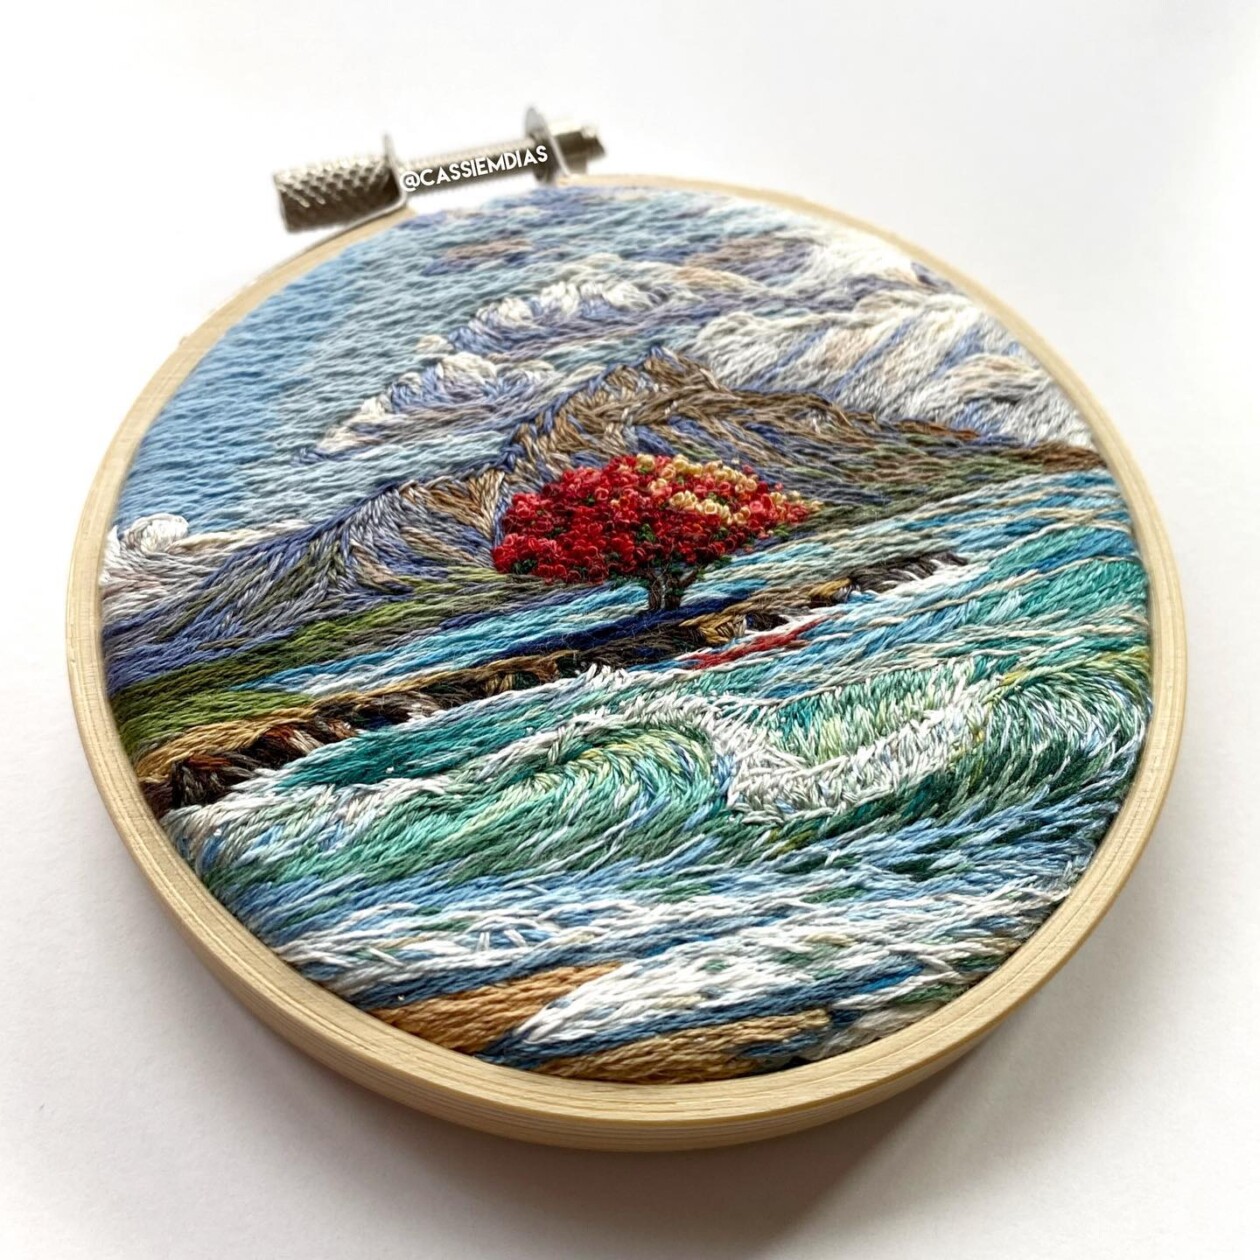 Wonderful Impressionistic Landscape Embroideries By Cassandra Dias (5)